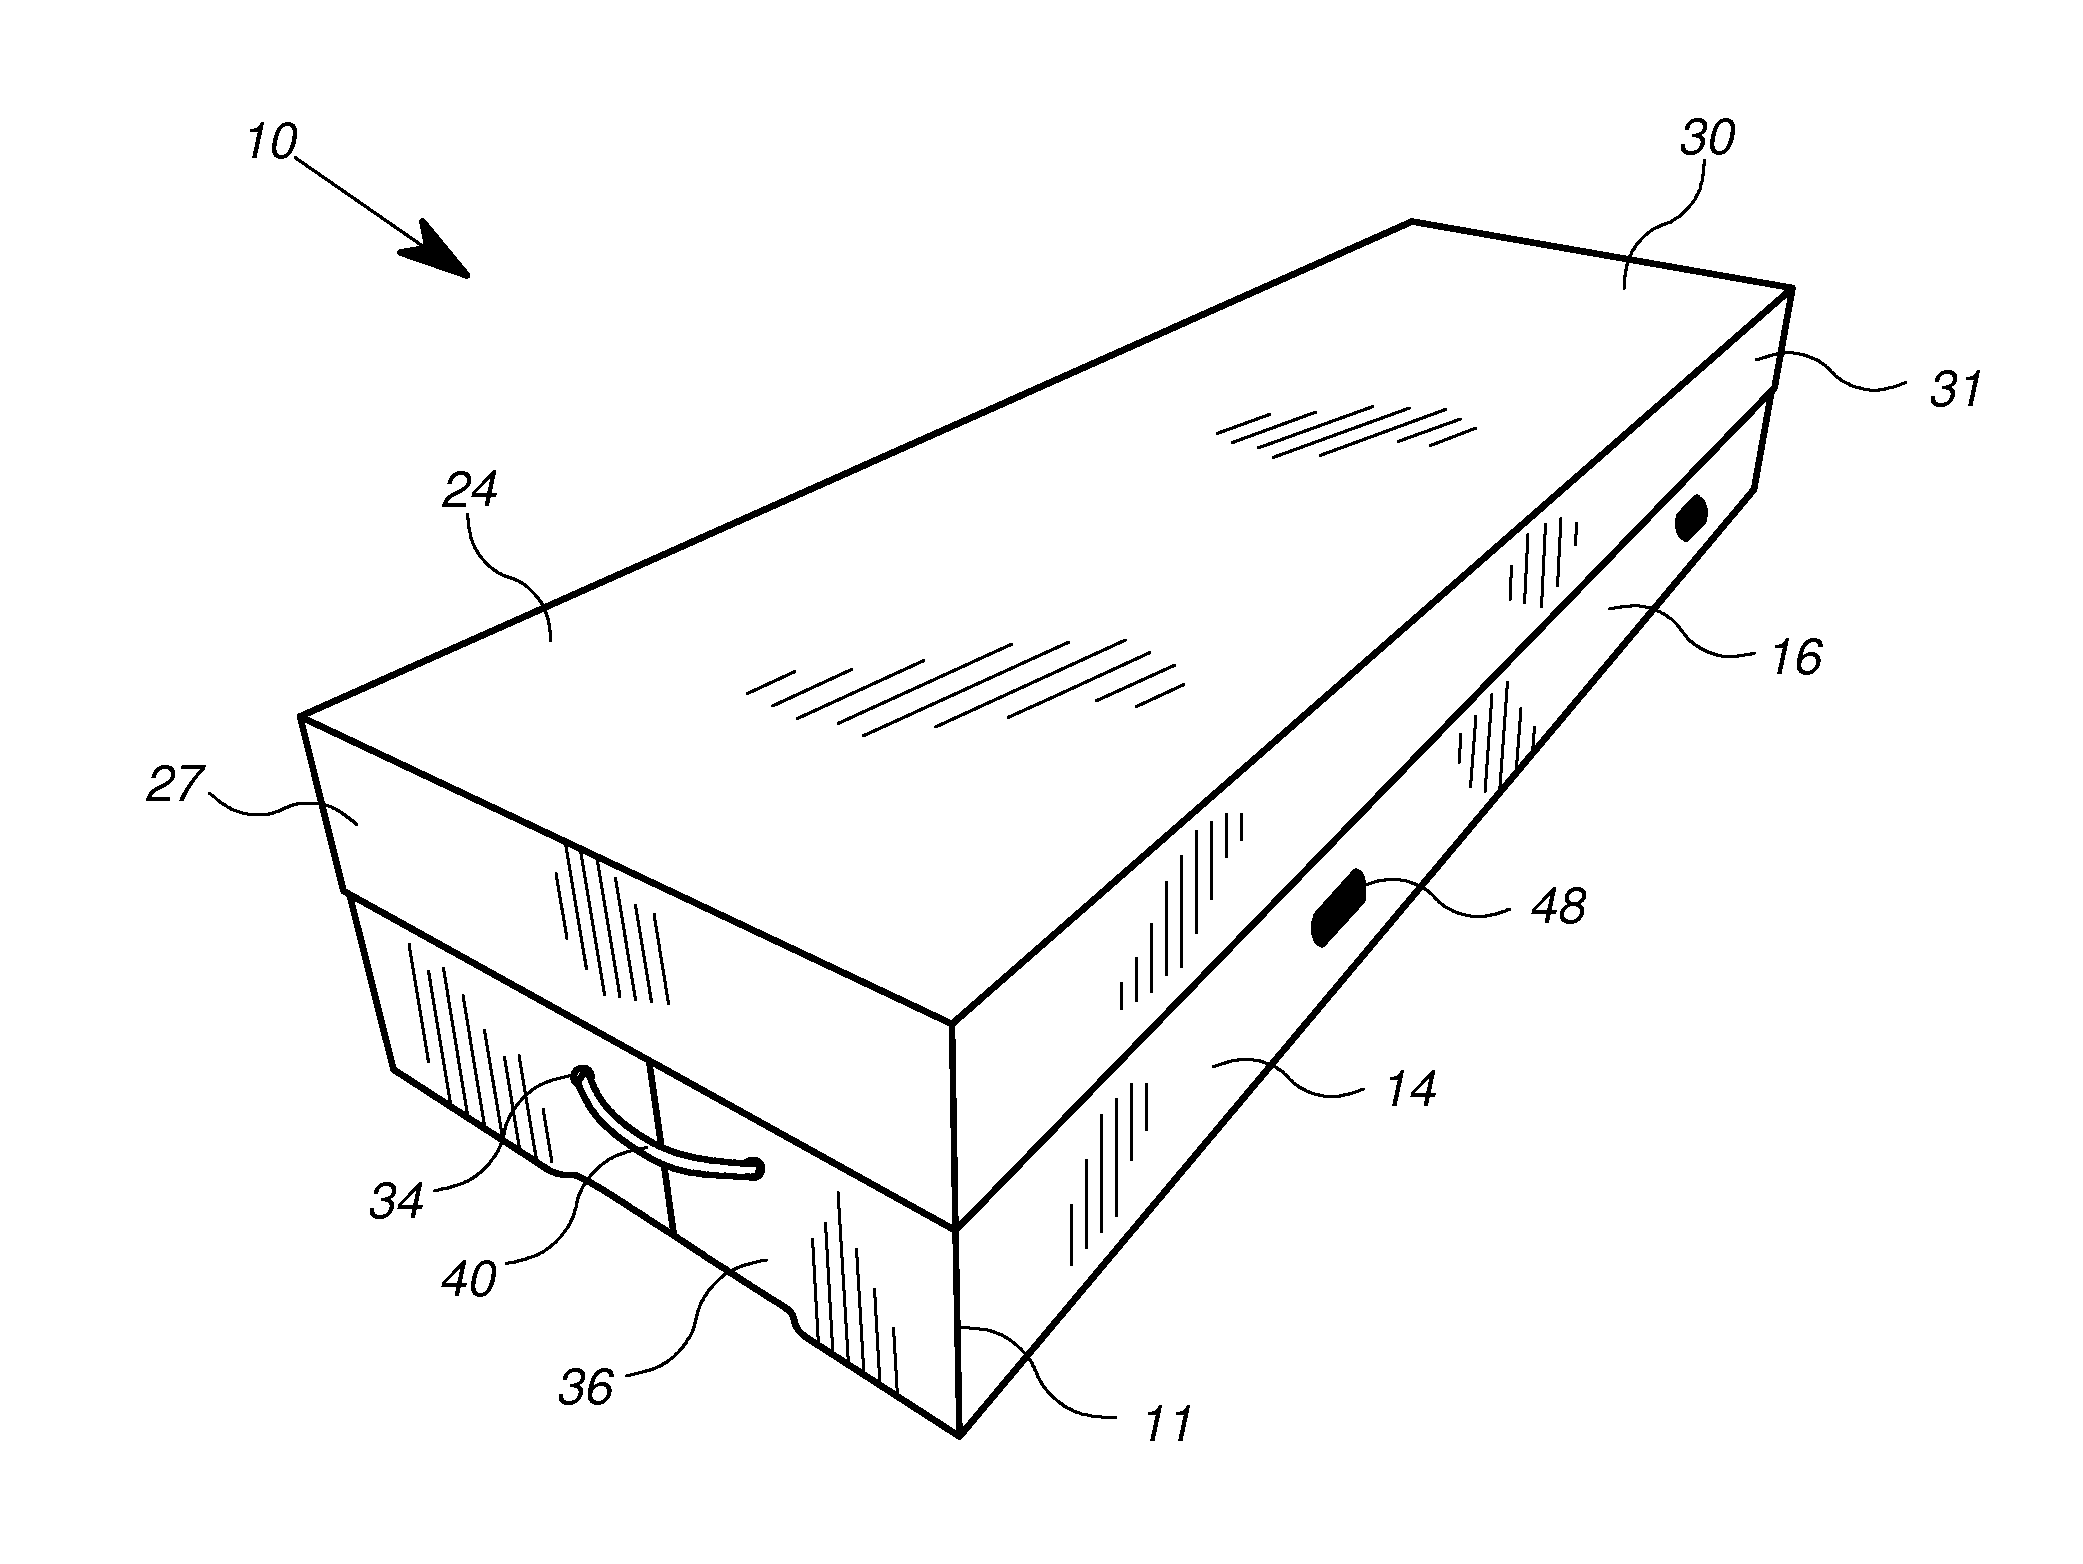 Lightweight casket having foldable features